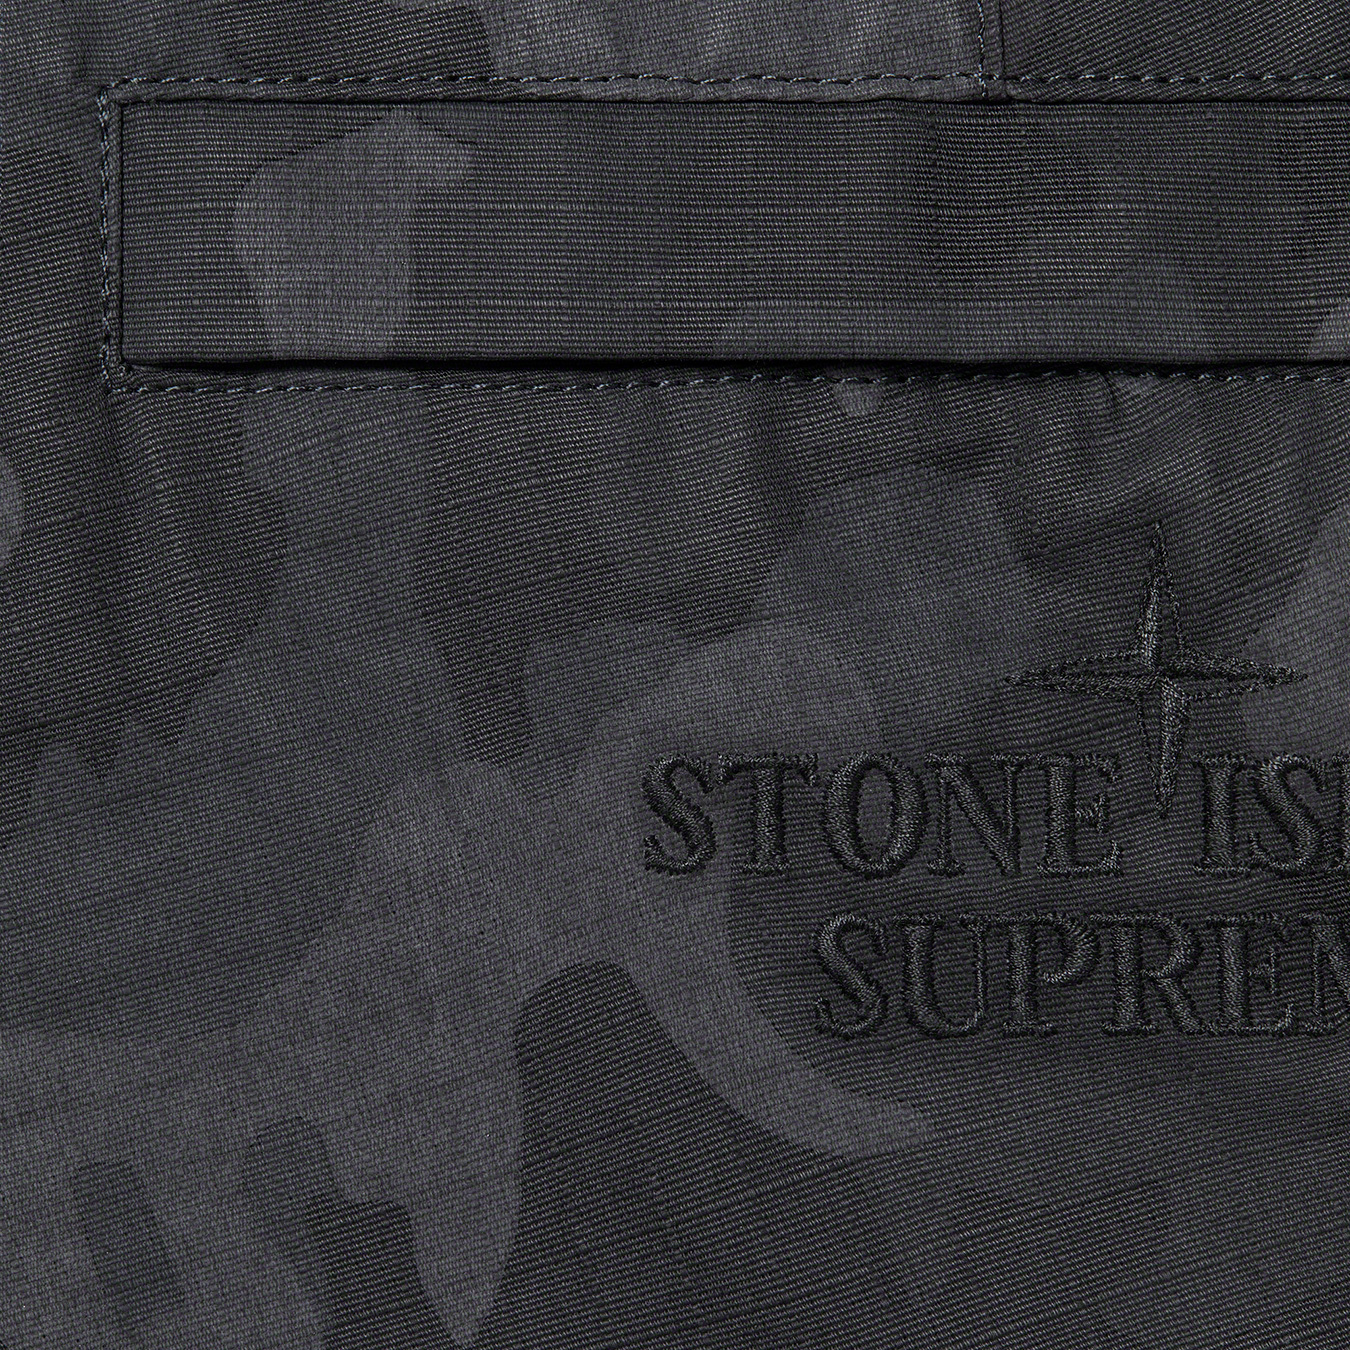 Supreme Supreme x stone island camo pants